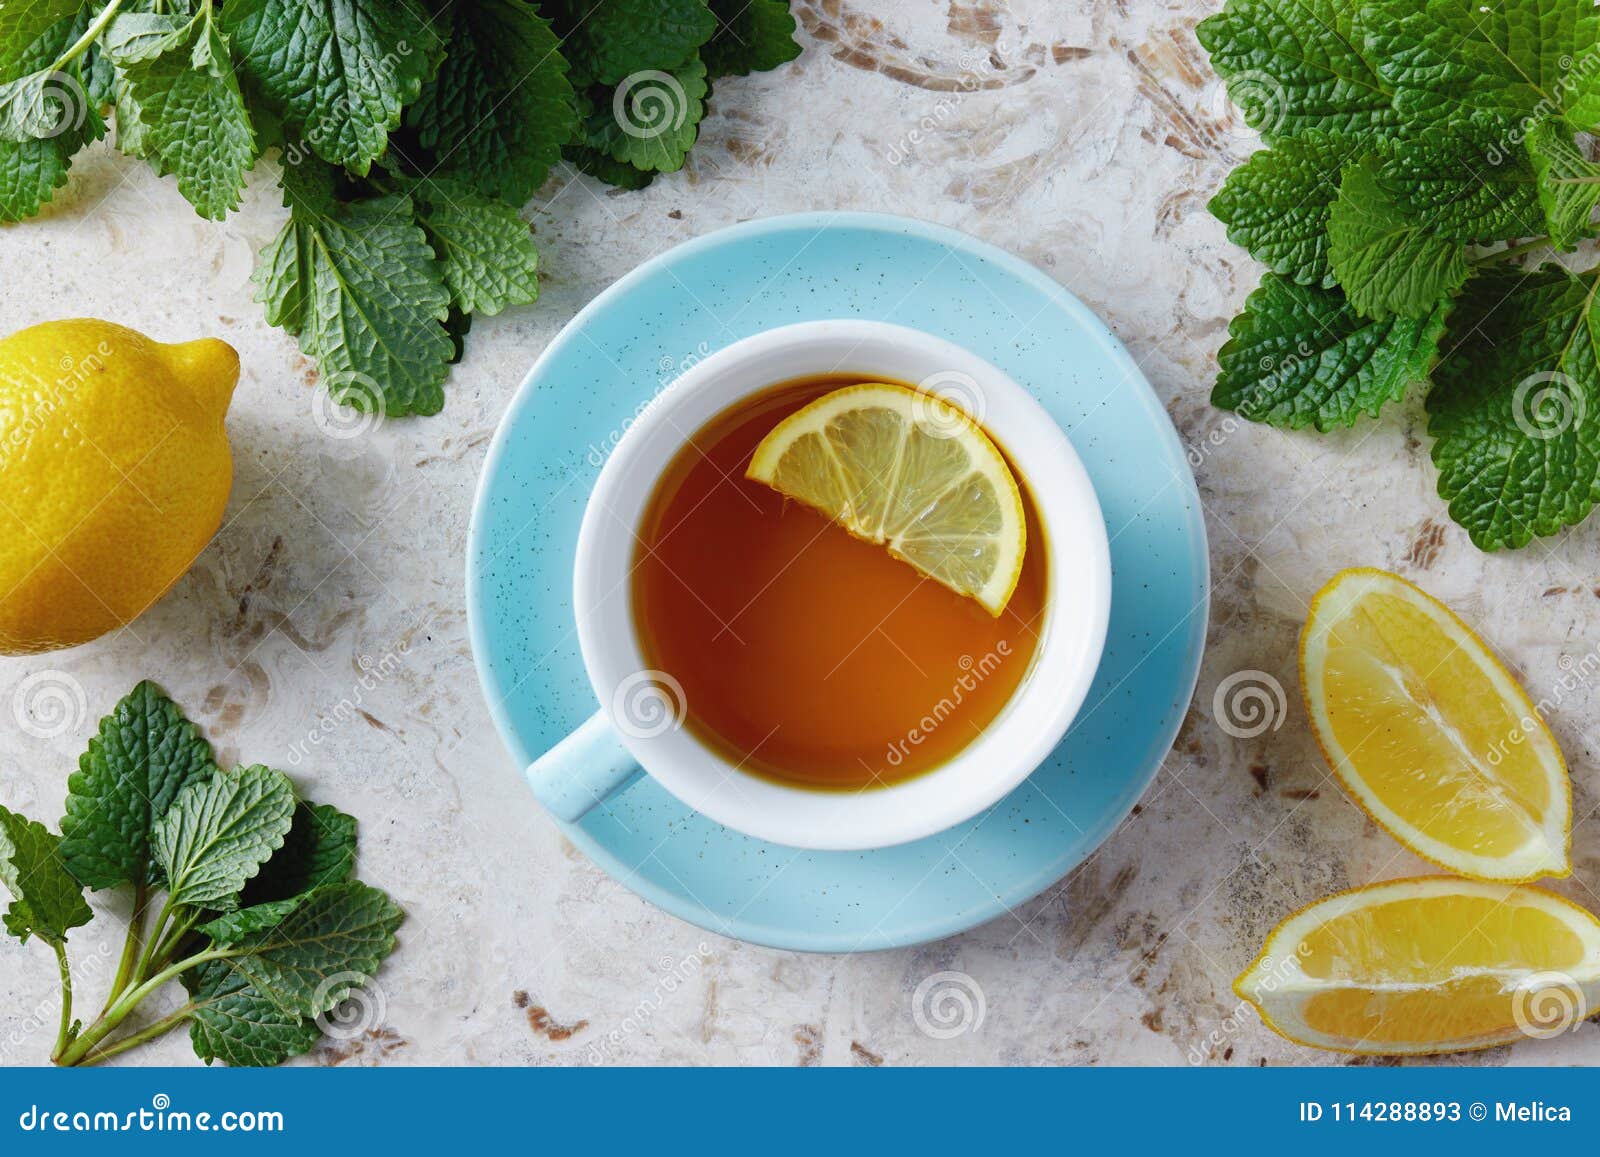 lemon balm tea with honey